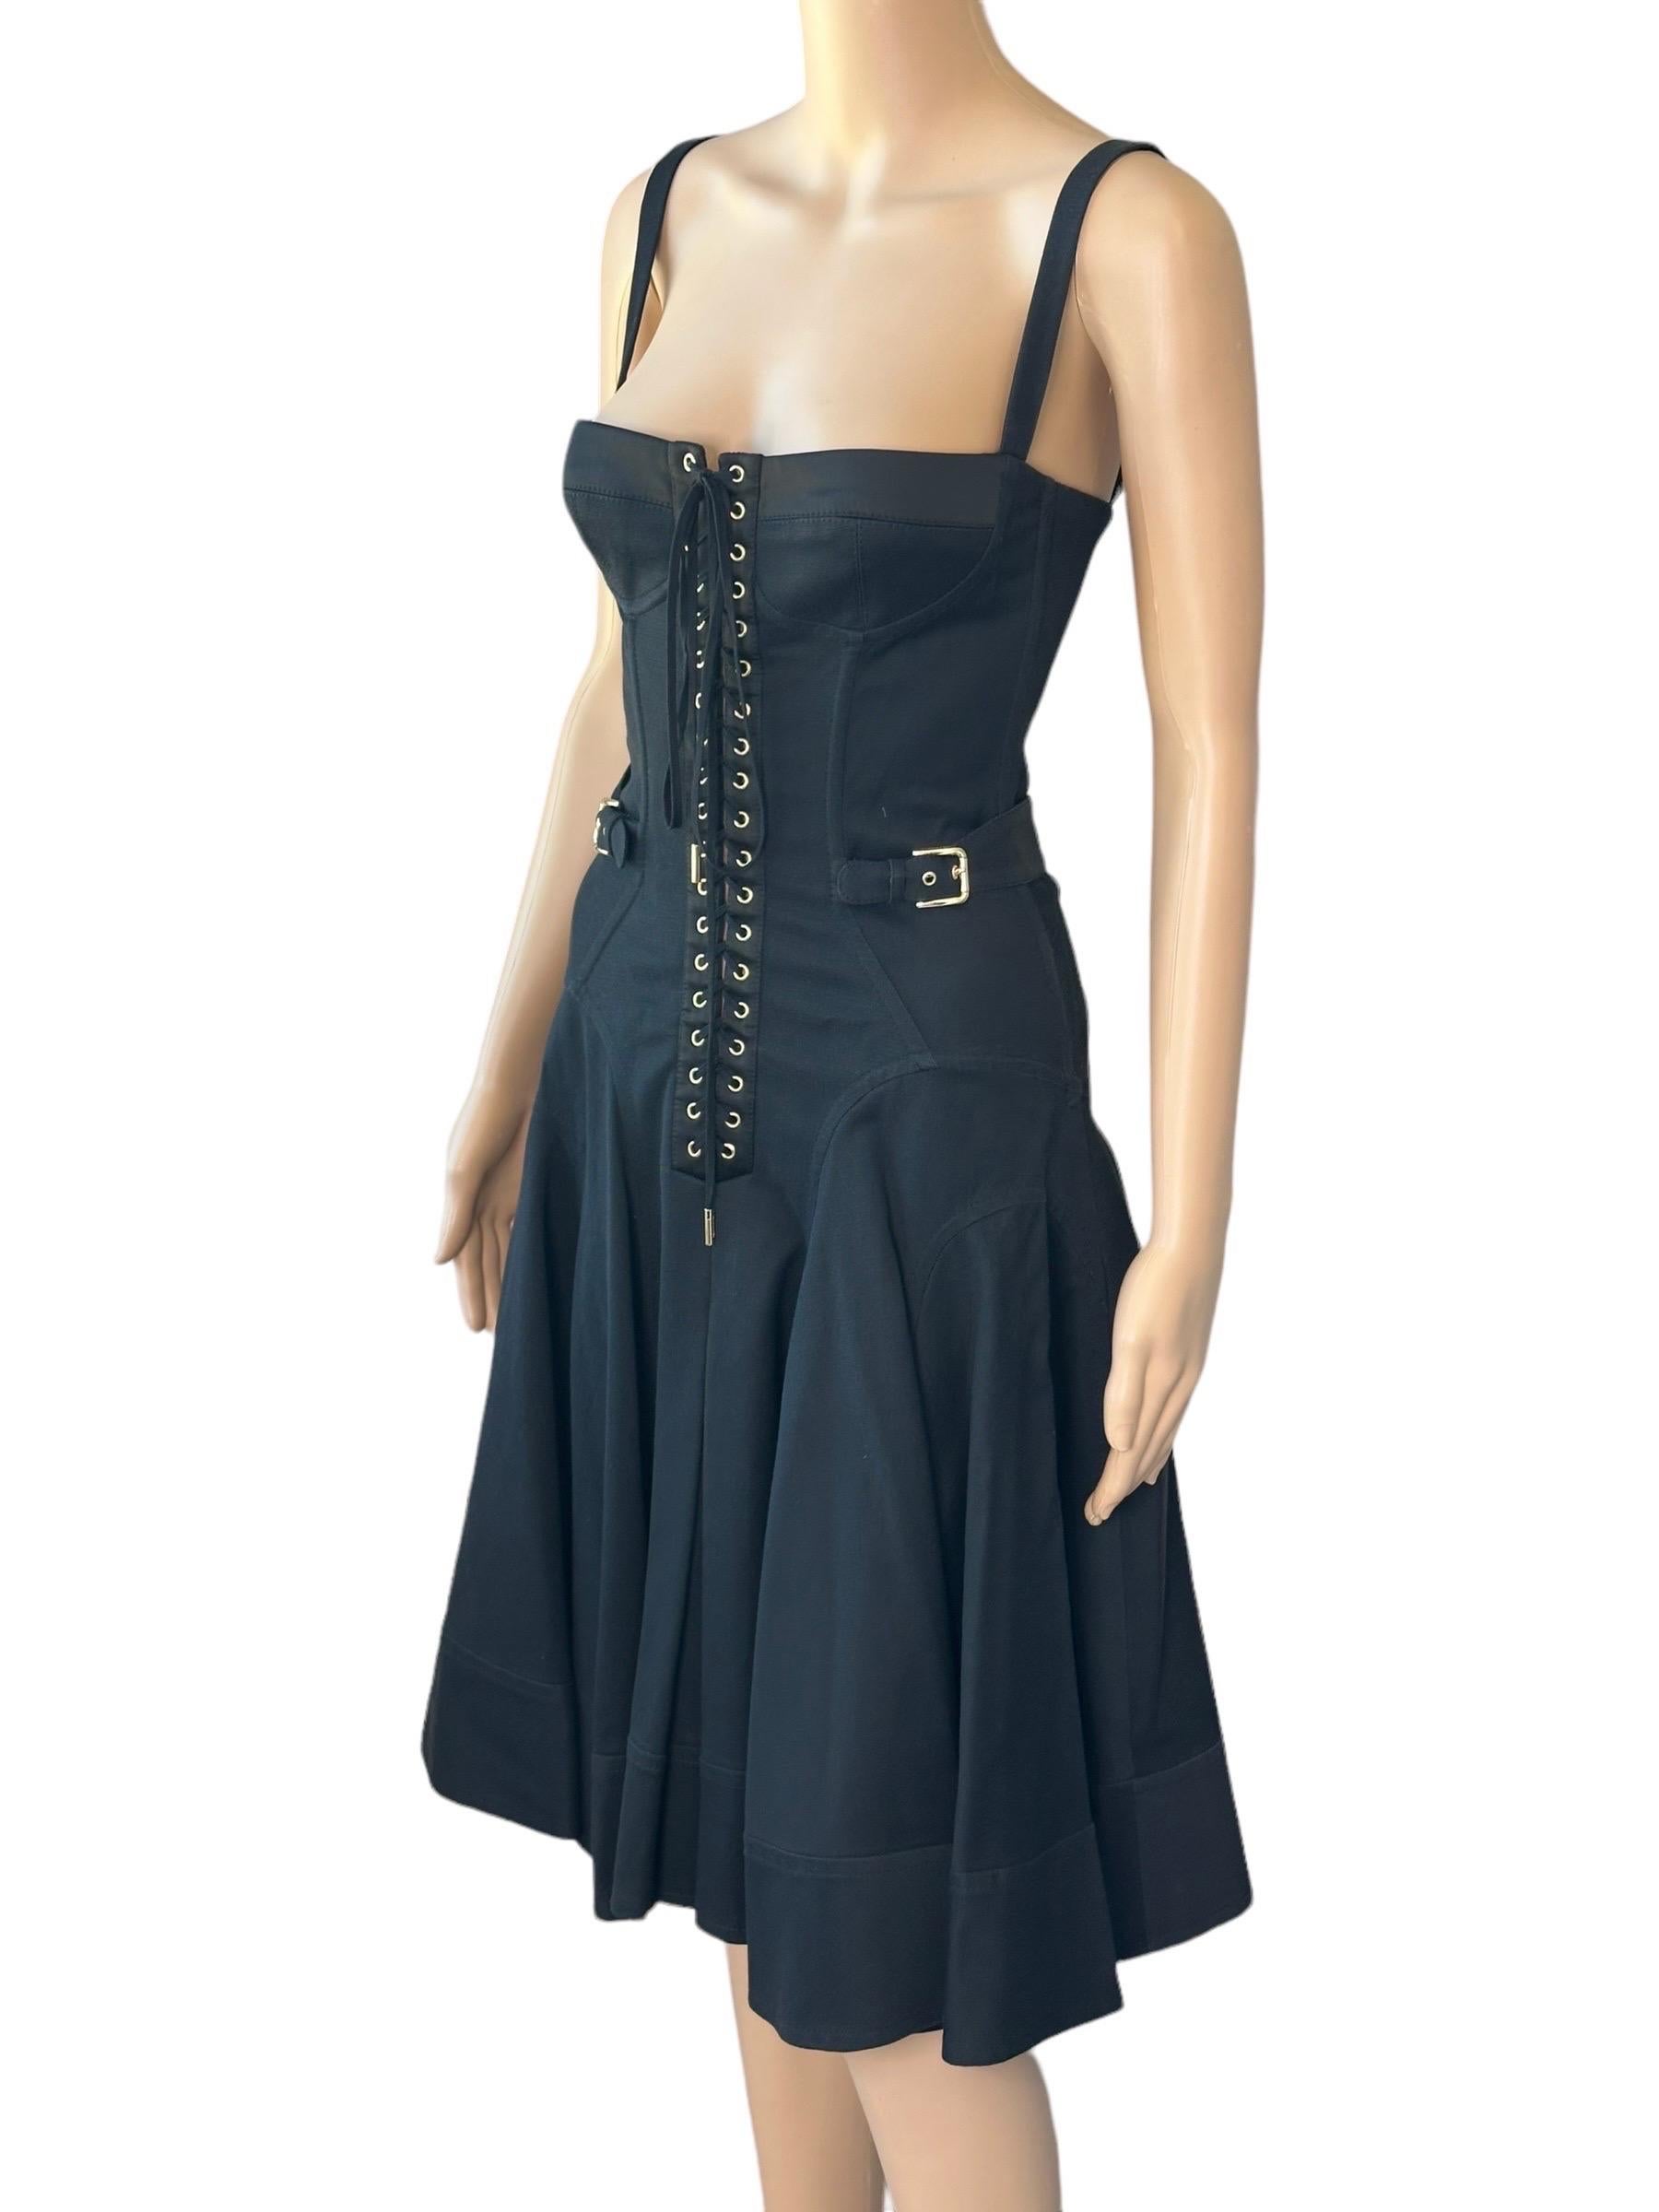 Dolce & Gabbana S/S 2007 Unworn Corset Lace-Up Bustier Black Dress For Sale 6